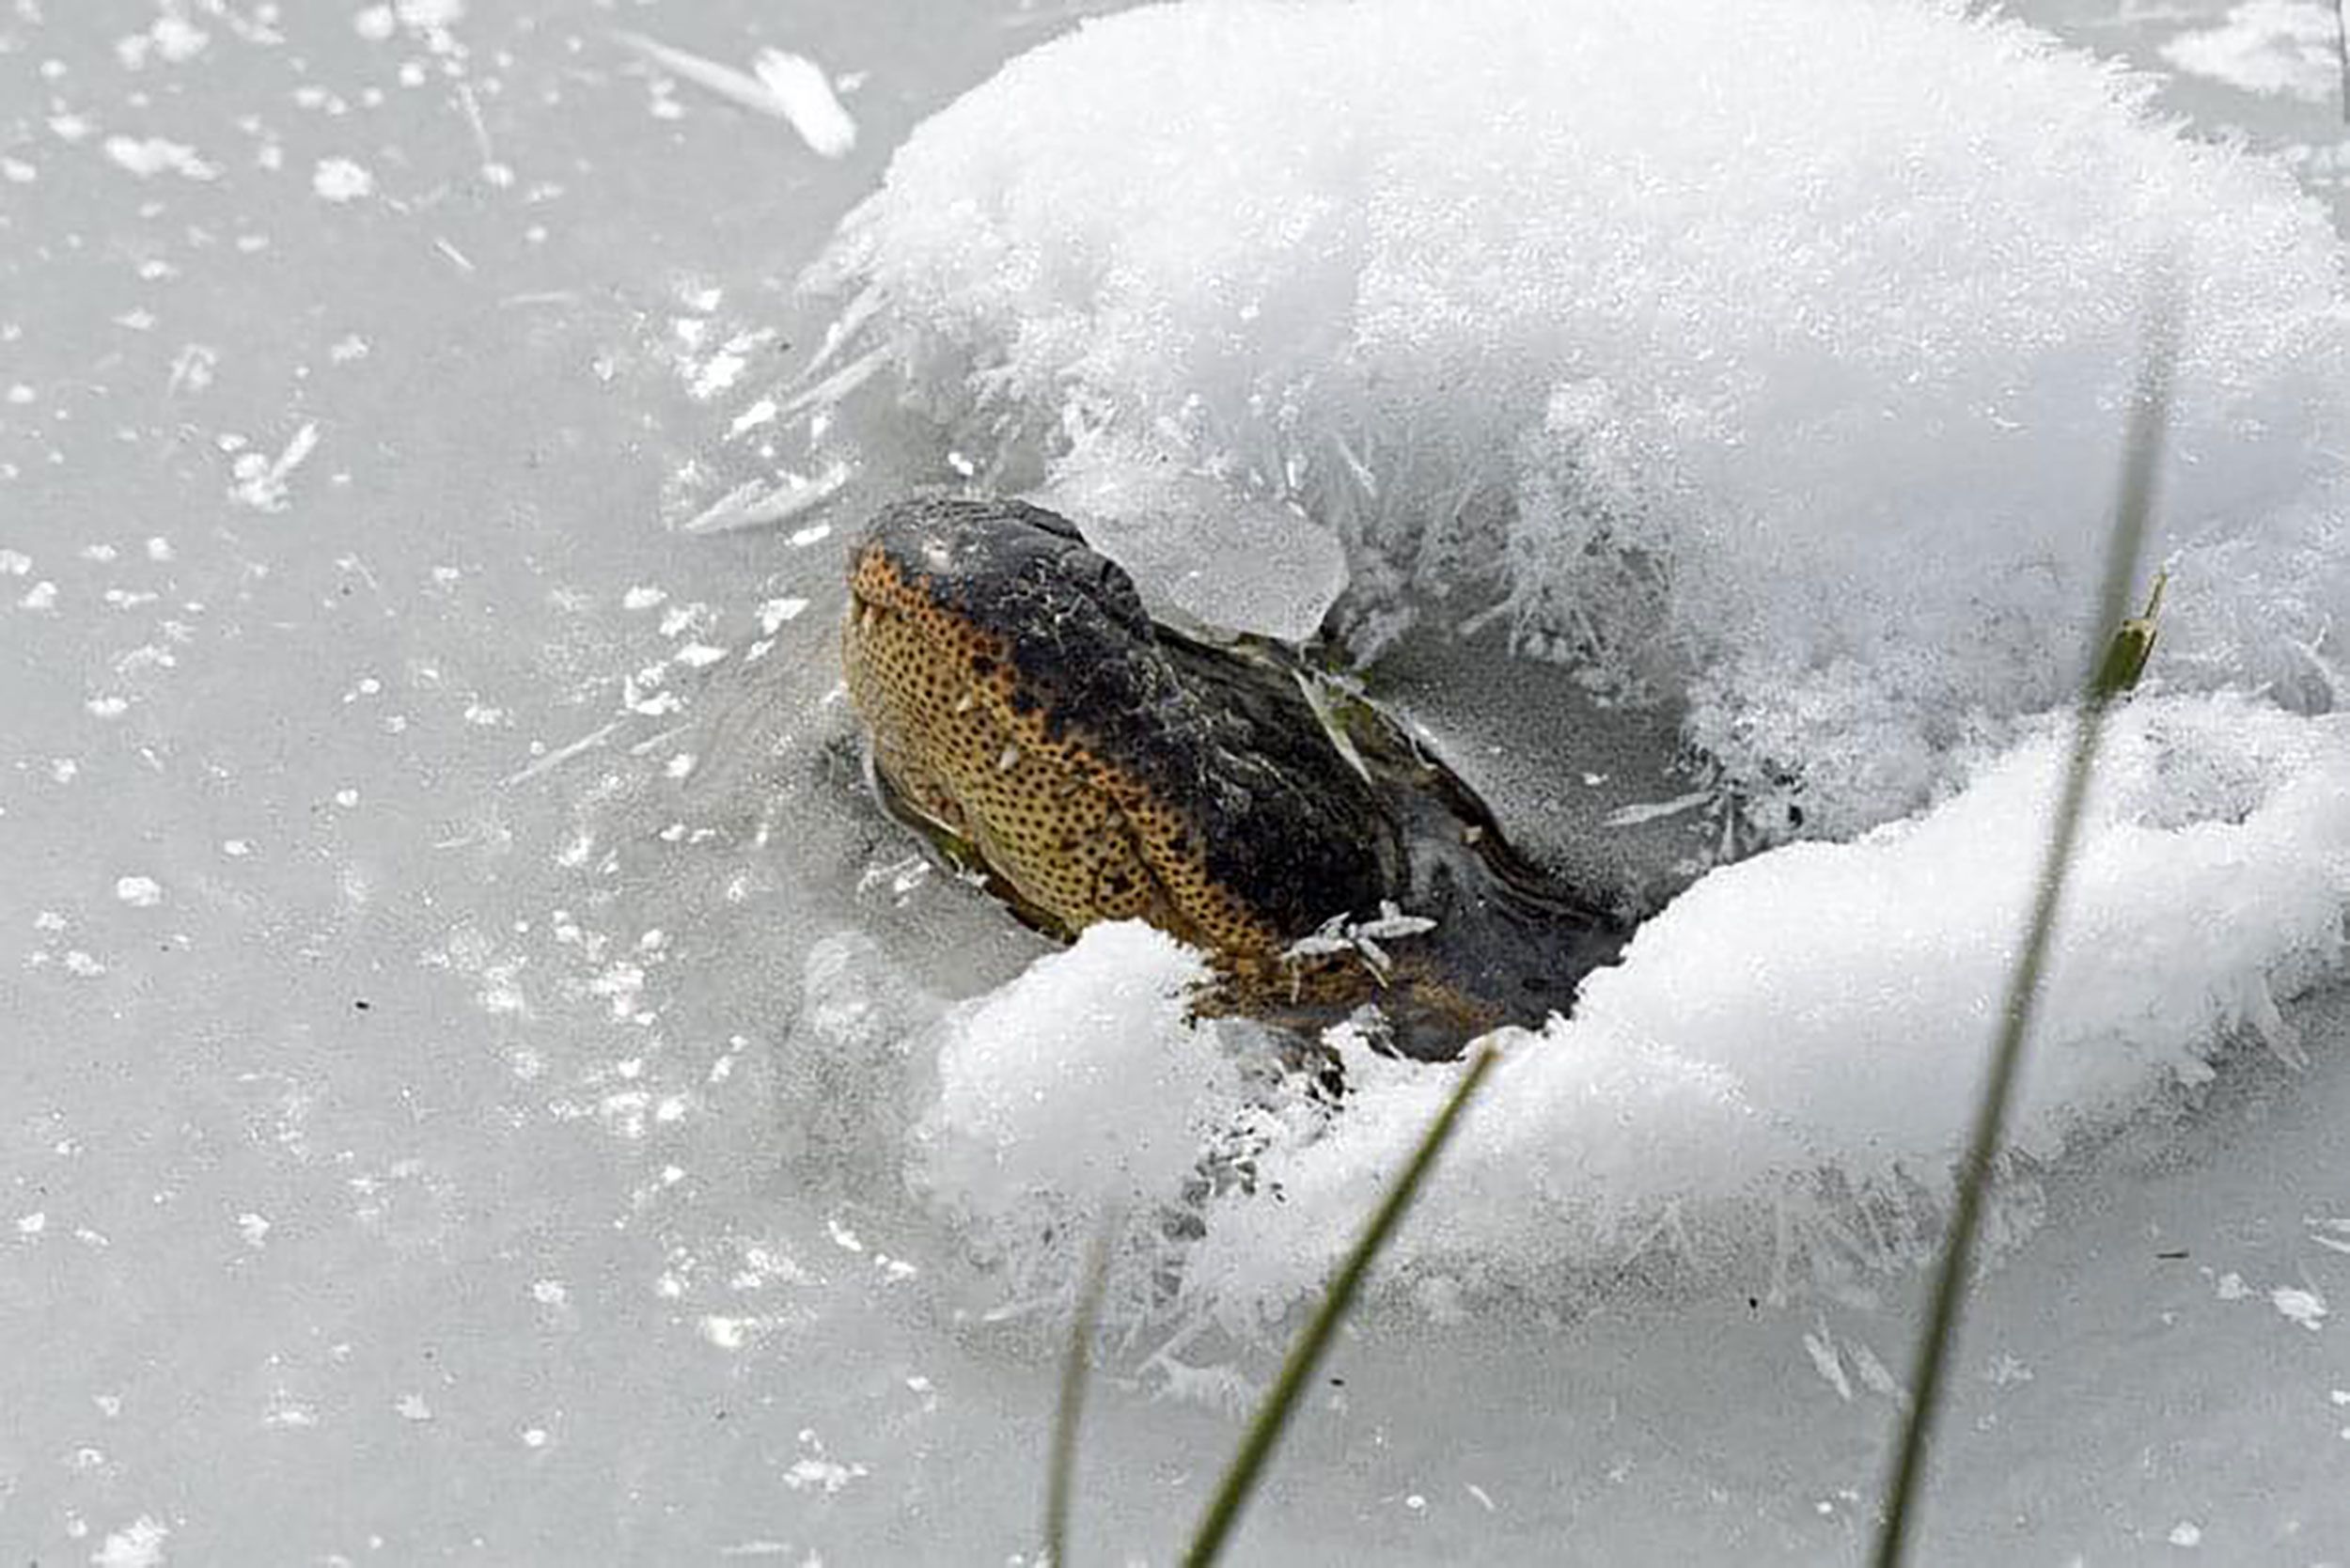 Alligators stick above freezing waters breathe | CNN